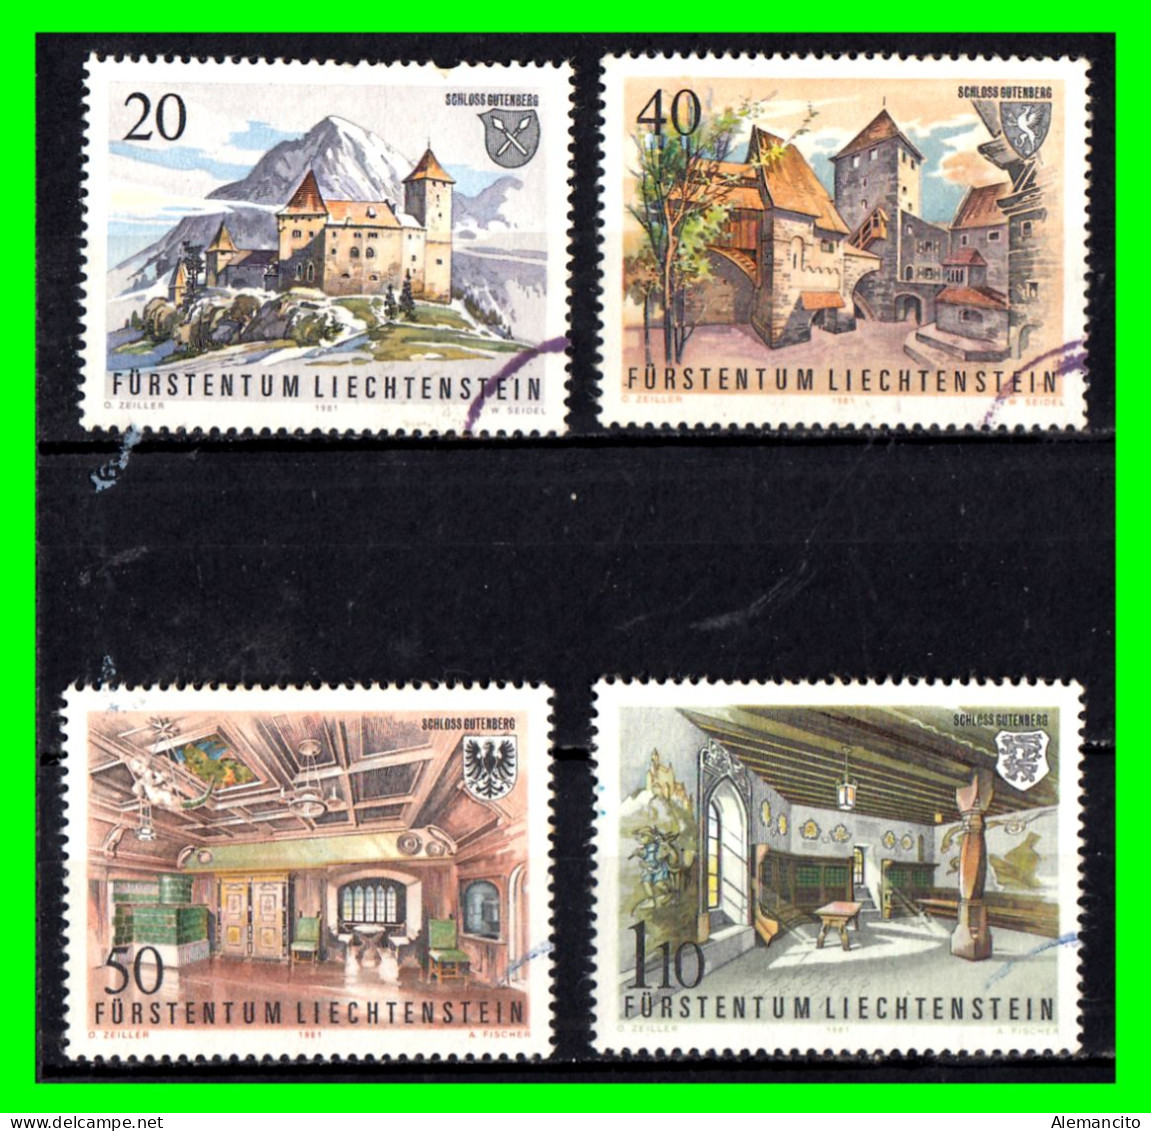 LIECHTENSTEIN ( EUROPA ) SERIE DE SELLOS AÑO 1981 EL CASTILLO DE GUTENBERG - Unused Stamps